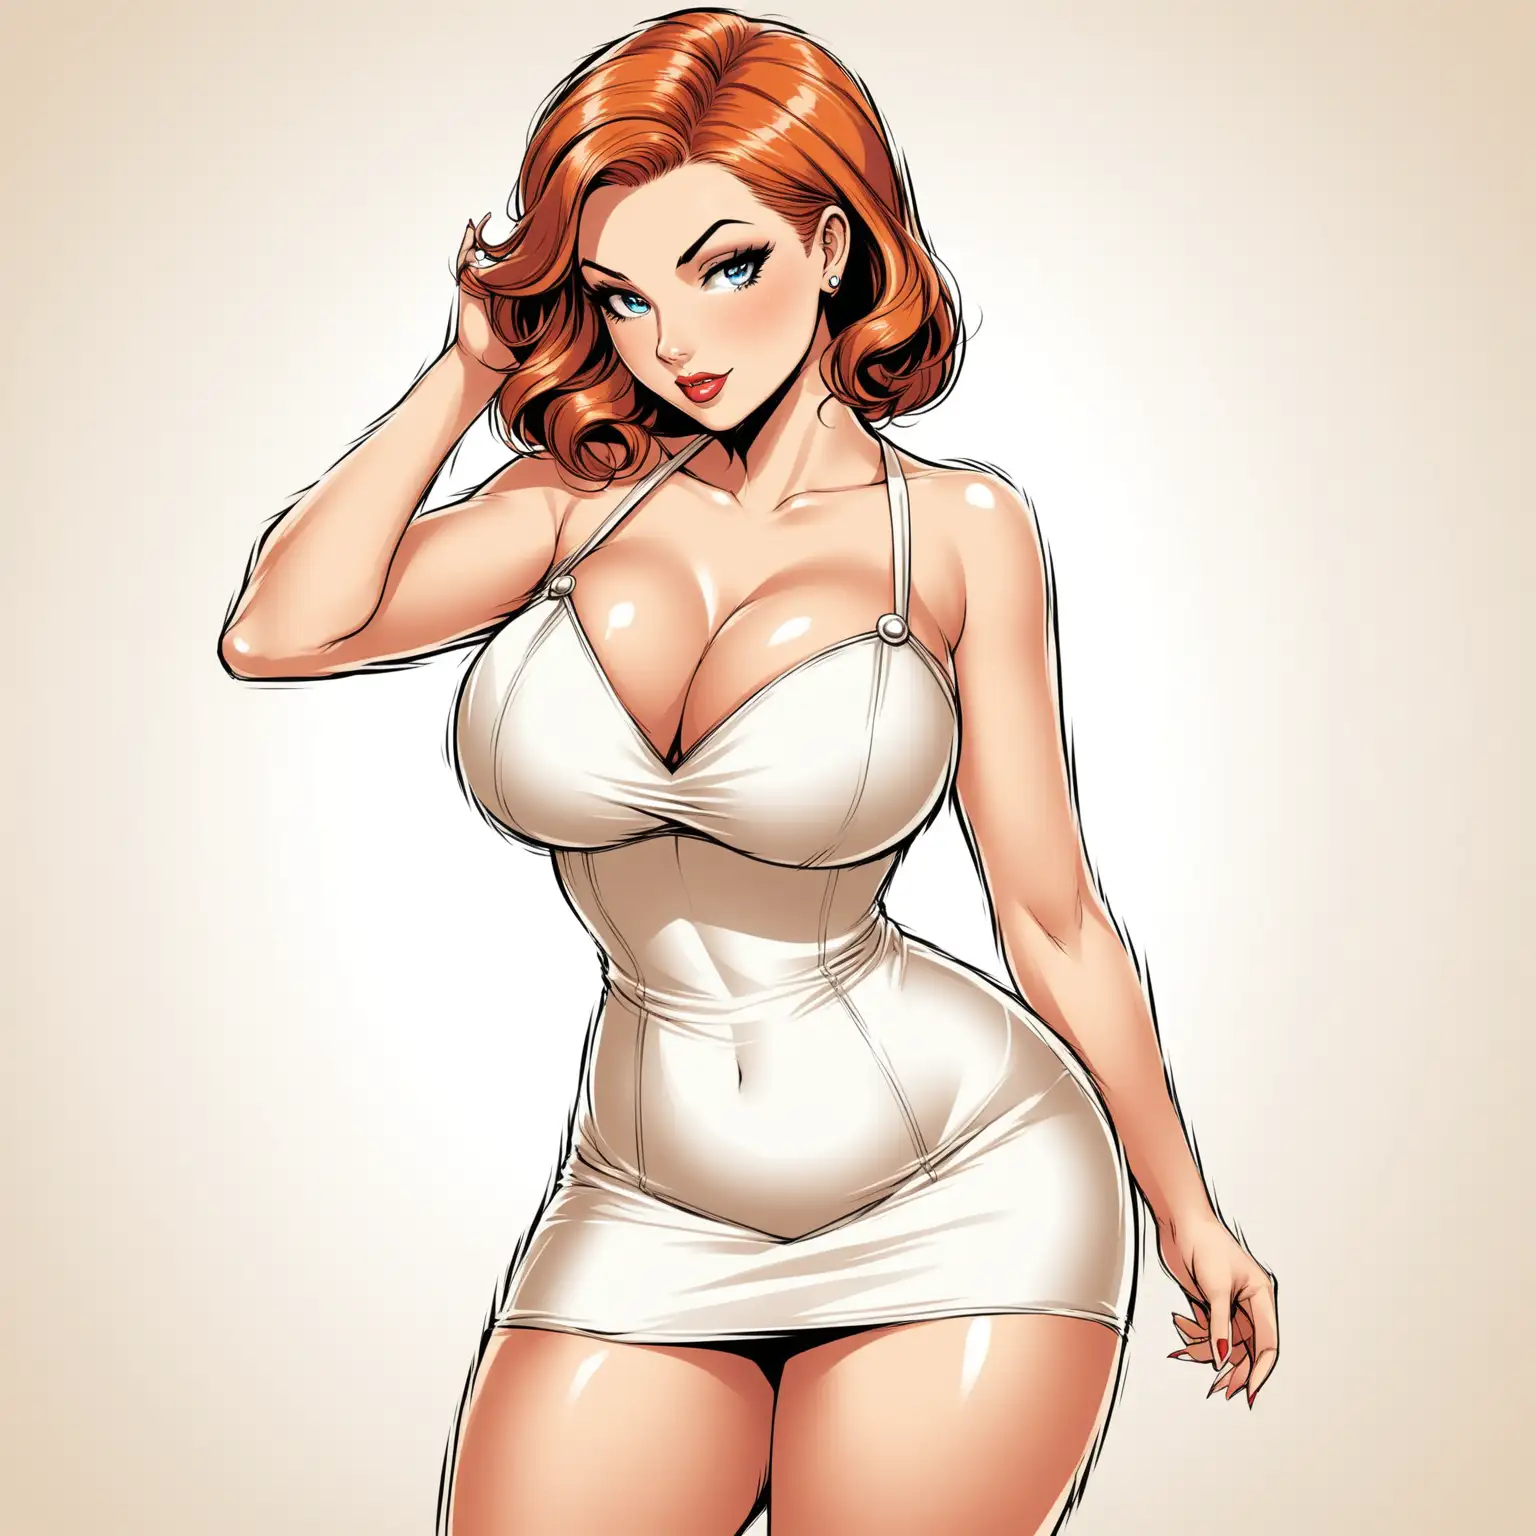 Comic Style PinUp Elegant Woman in Short White Dress